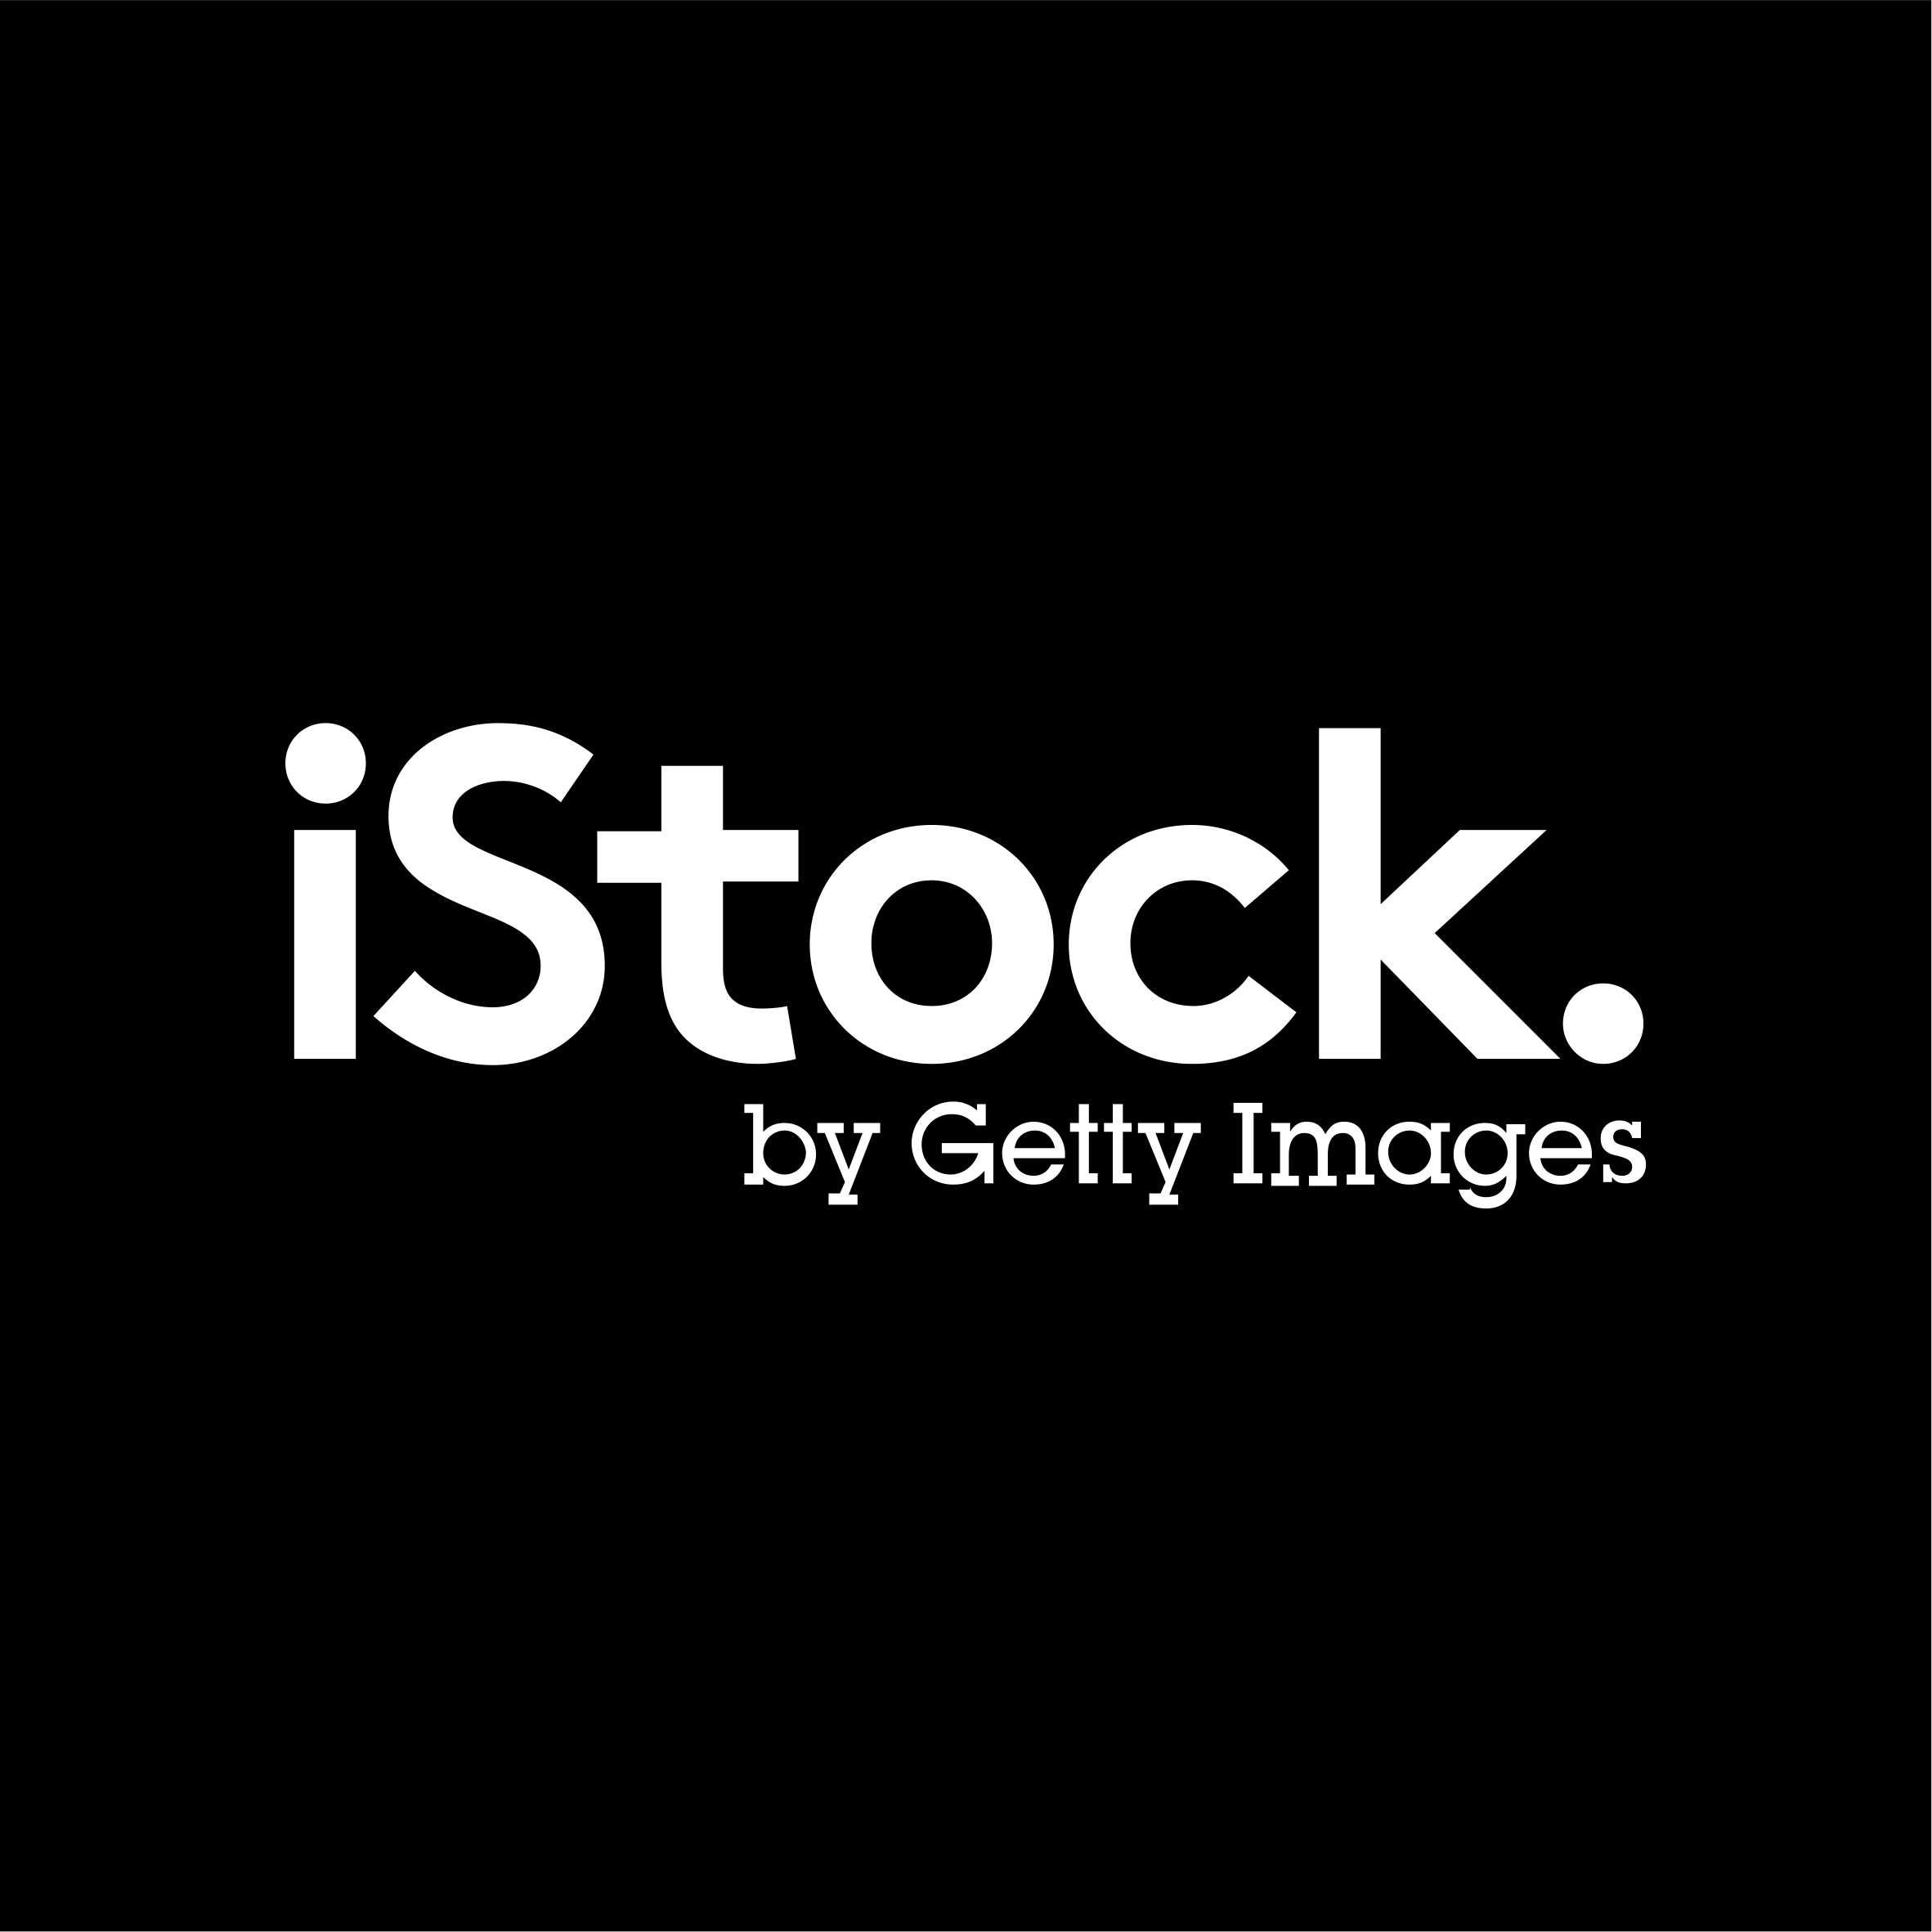 Shutterstock, Adobestock, Element Envato, Depositphoto Freepik premium